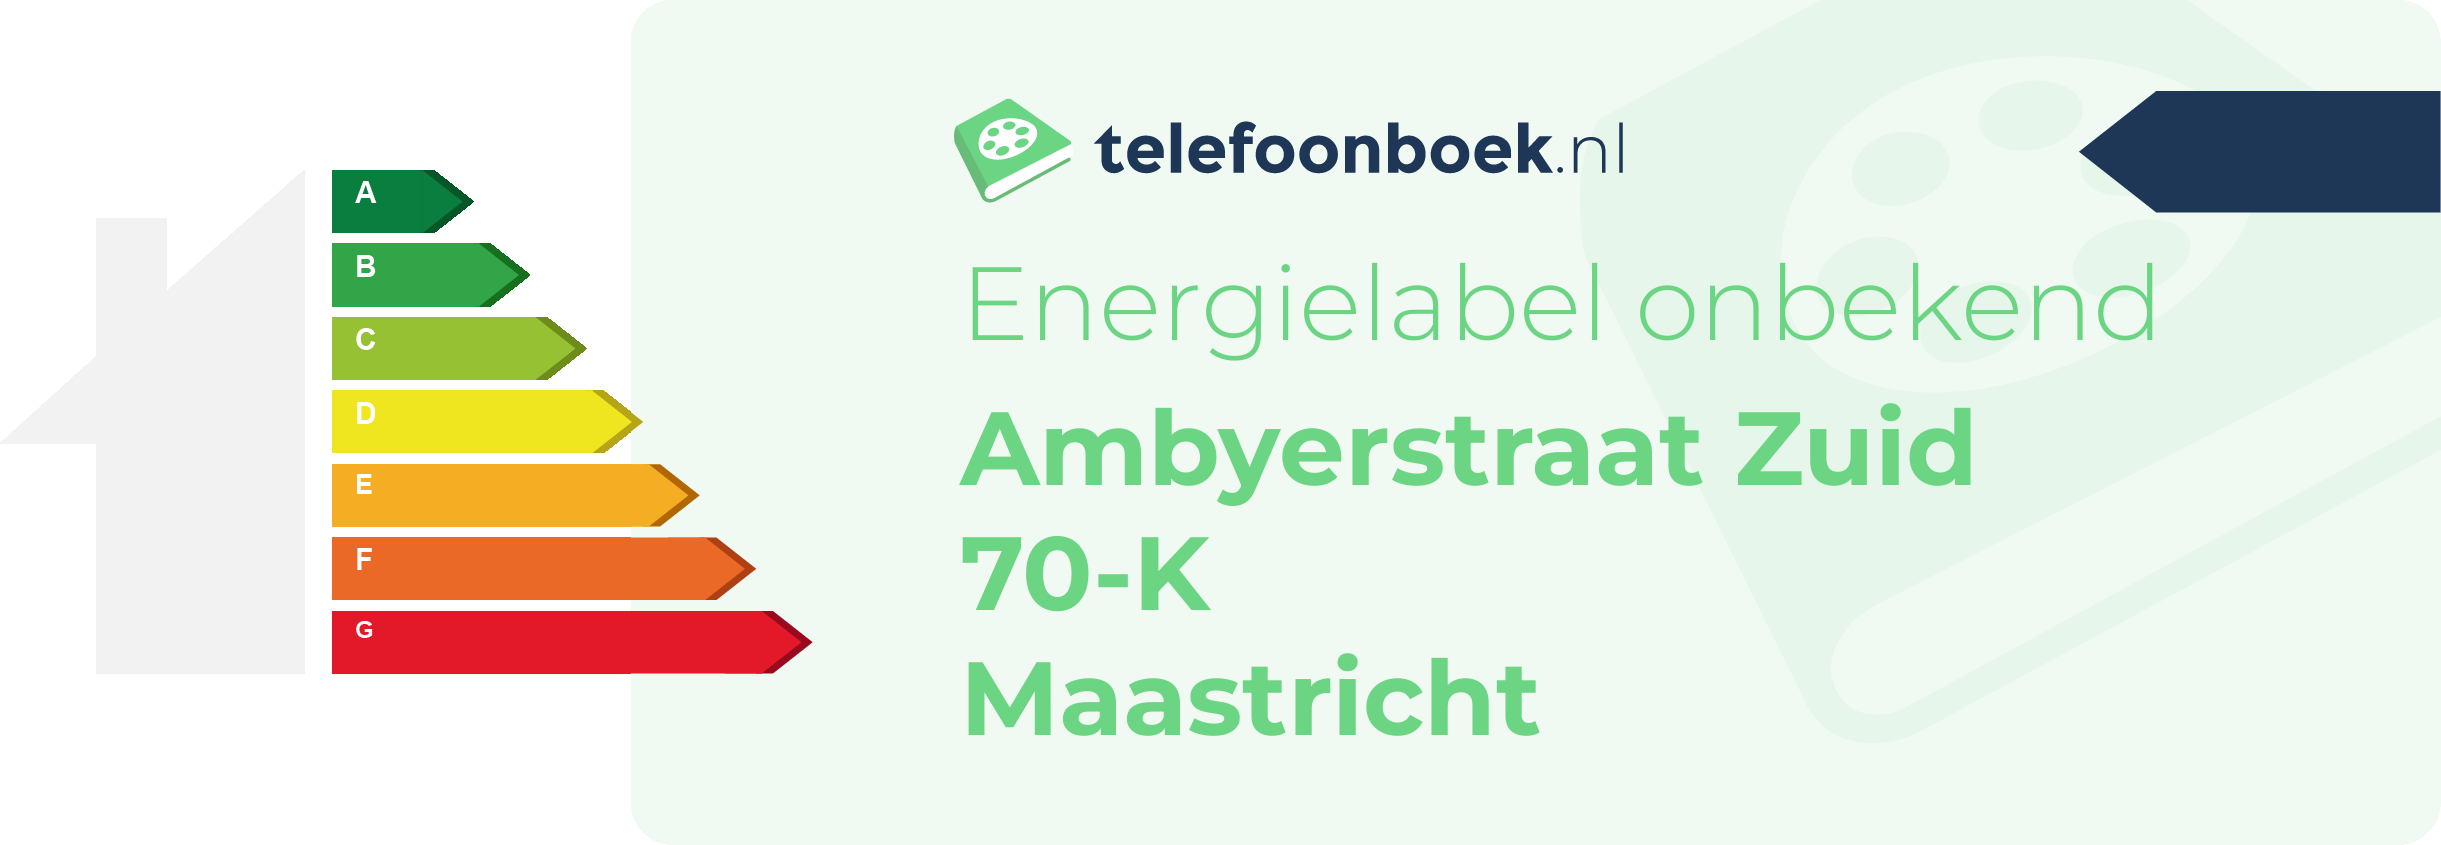 Energielabel Ambyerstraat Zuid 70-K Maastricht